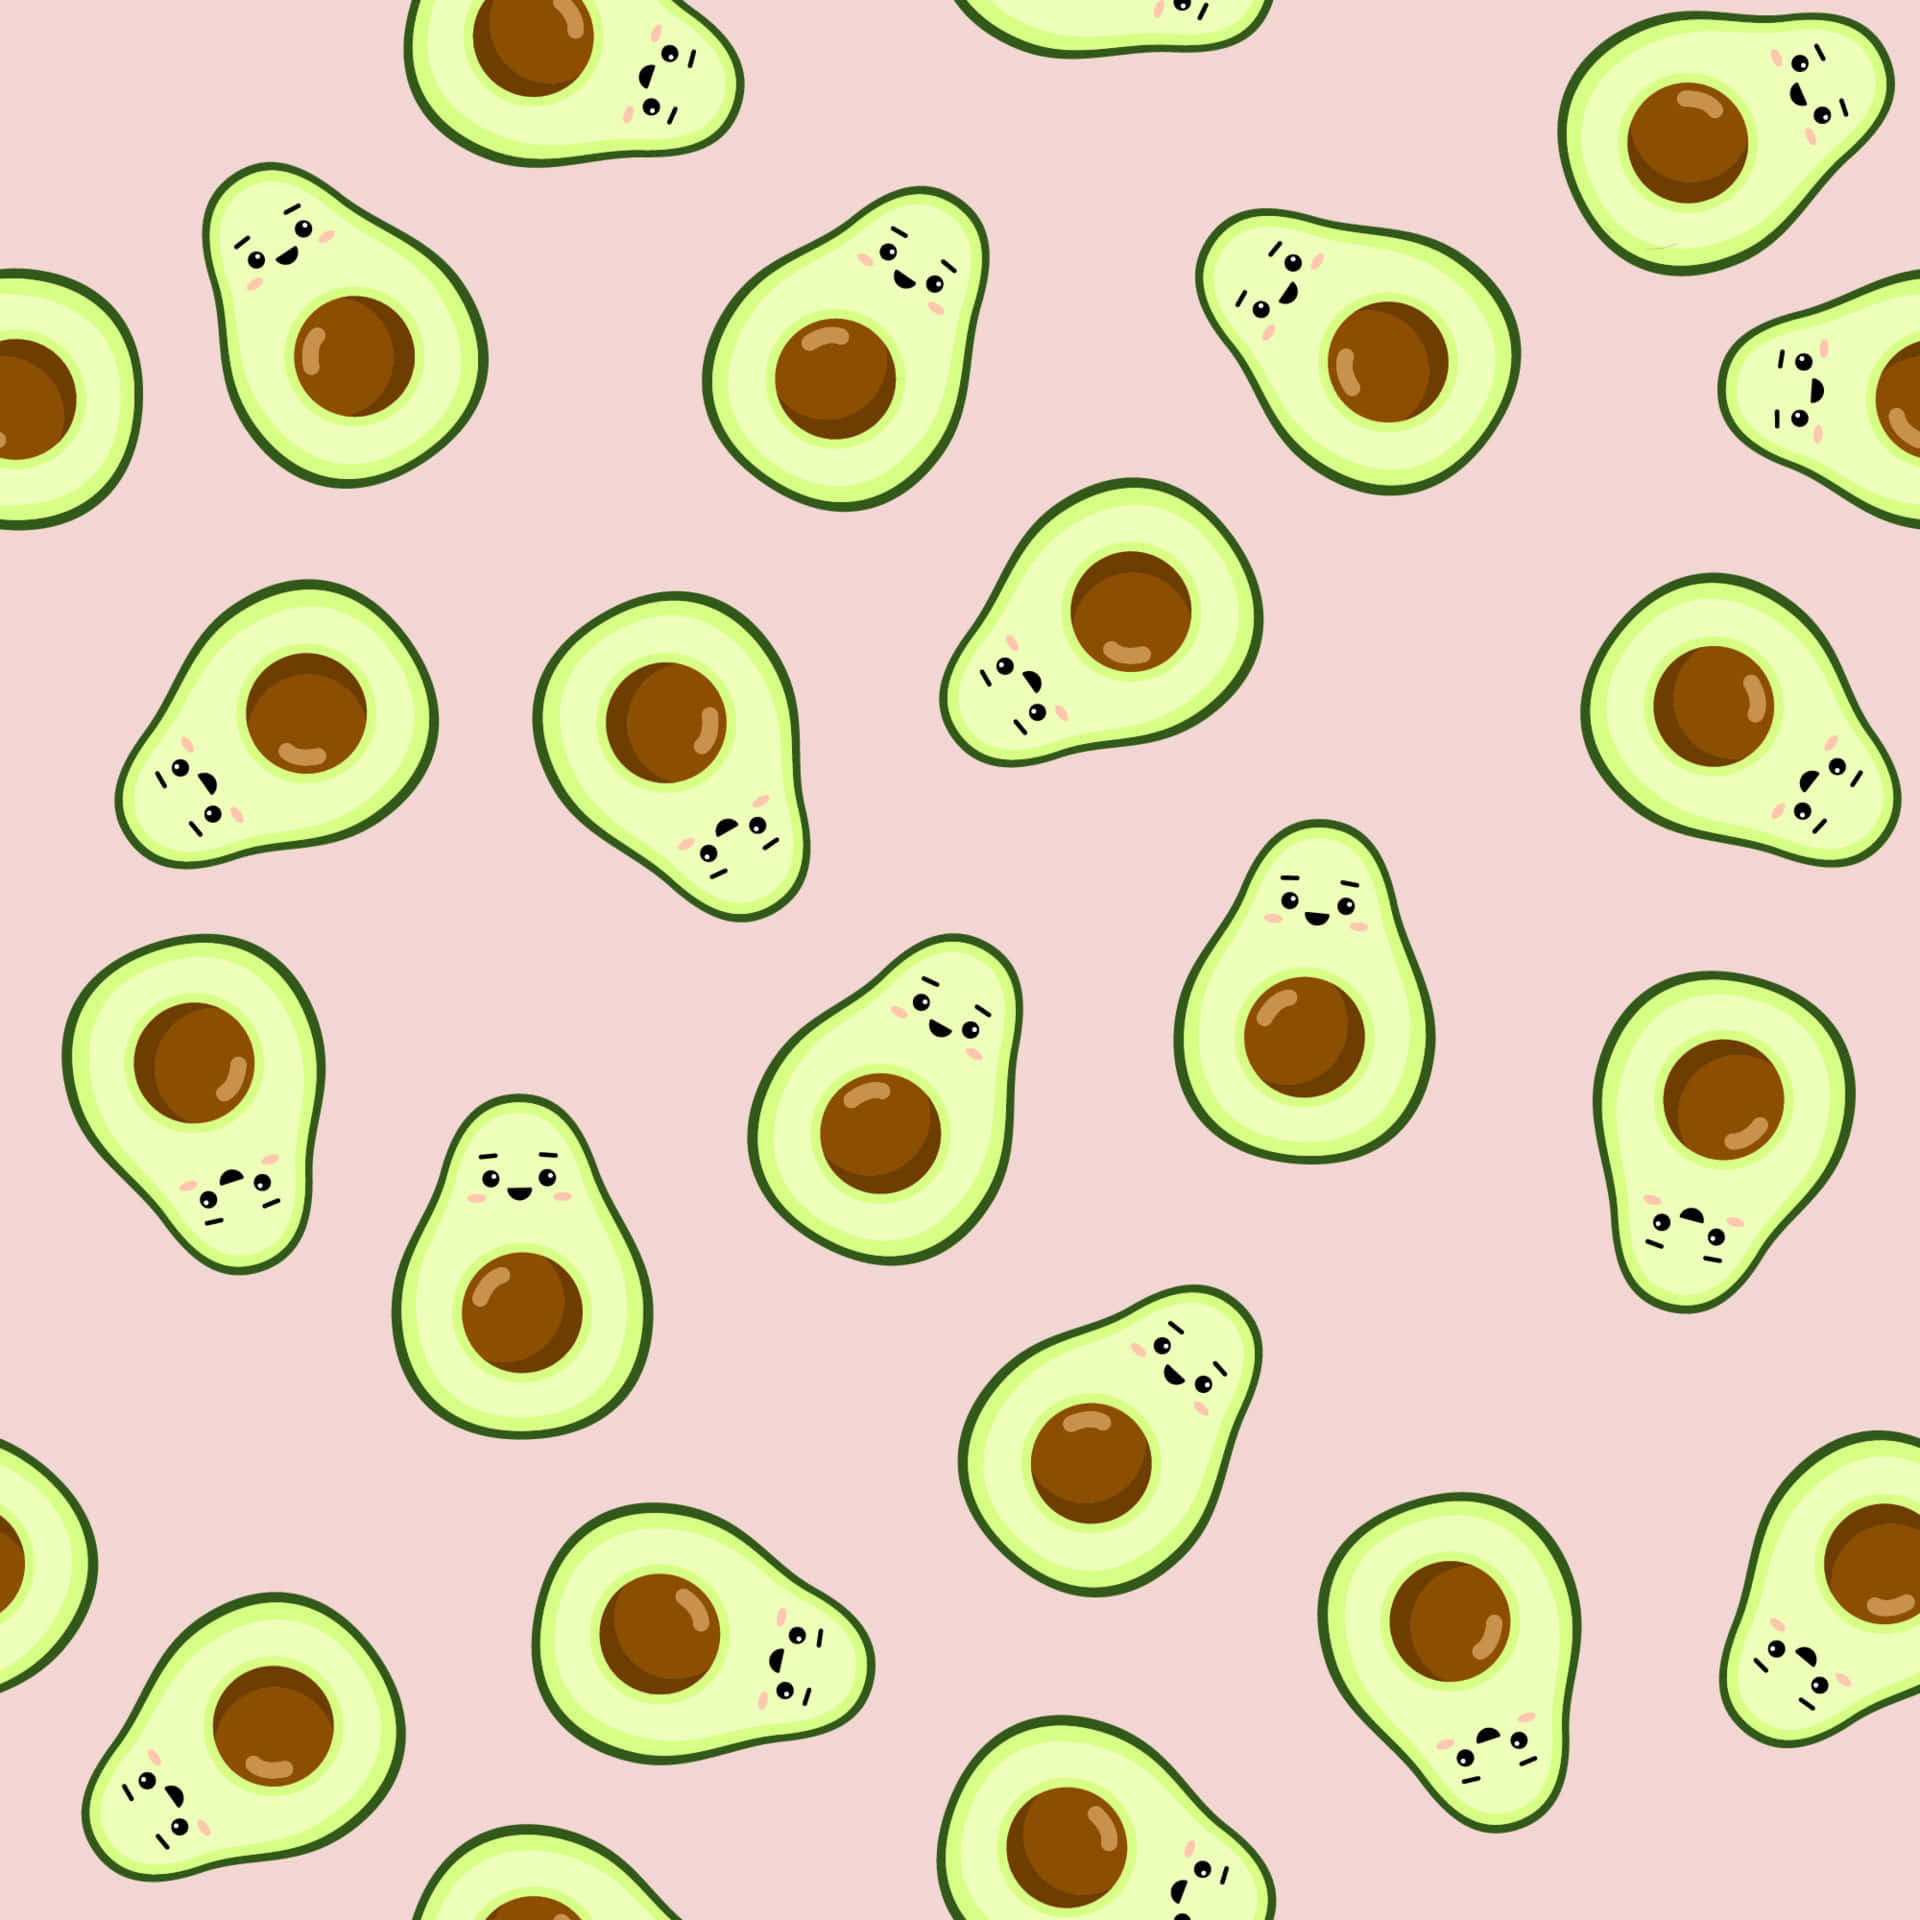 Cute Avocado Wallpaper for your Desktop or Mobile Device